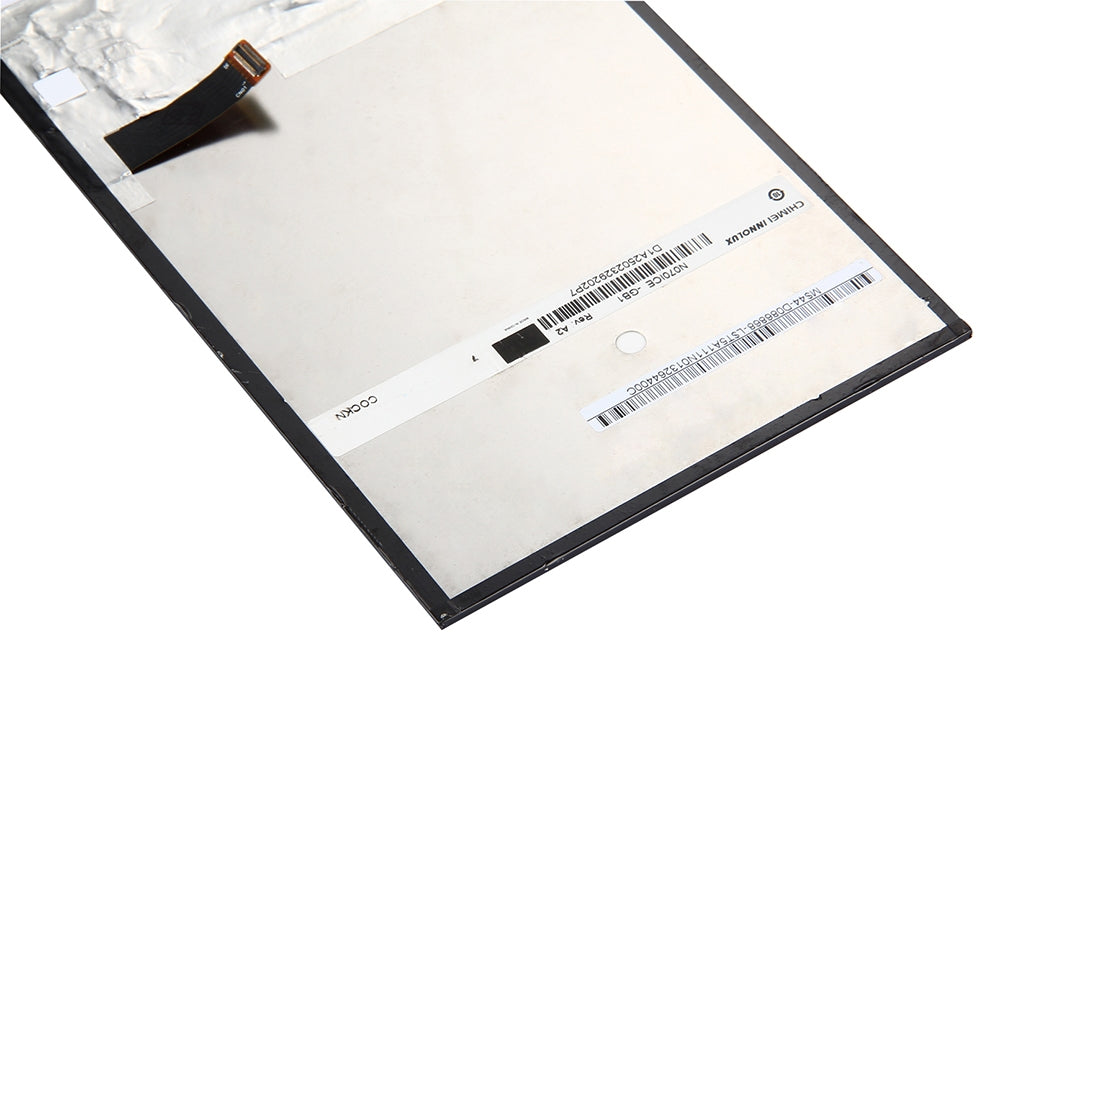 Ecran LCD Ecran Interne Asus FonePad ME371 K004